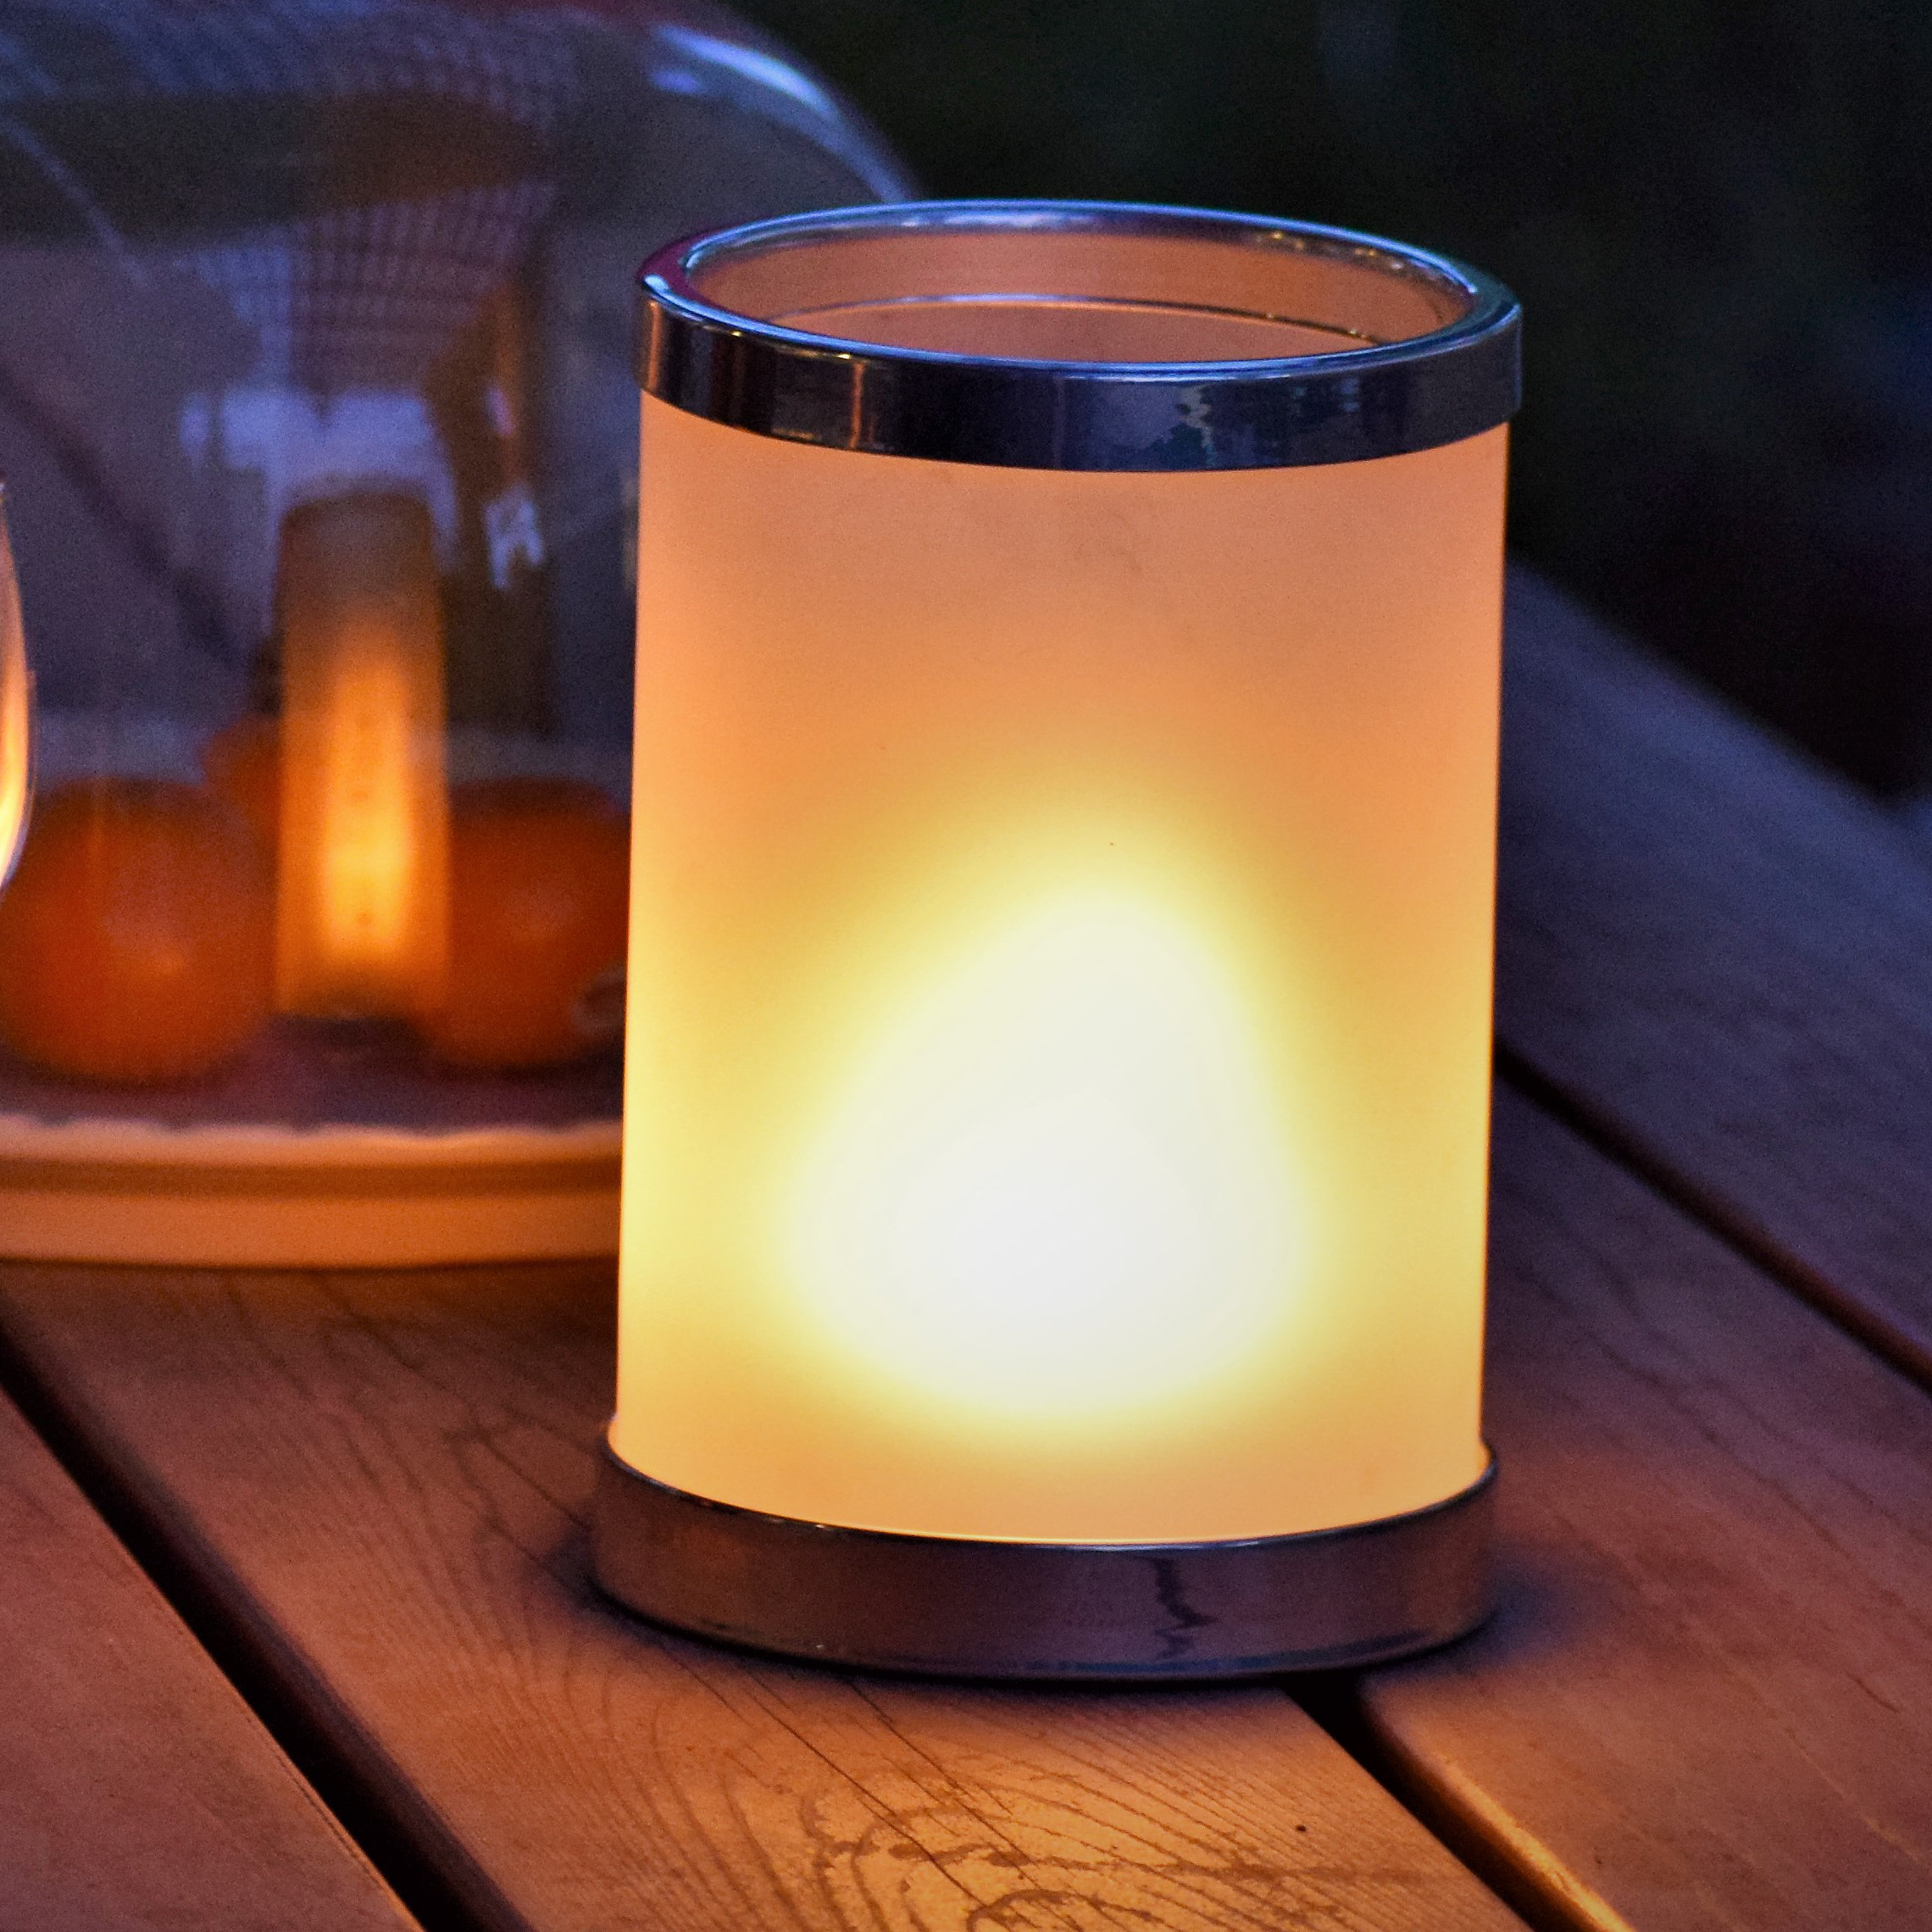 Hoogalife 7 8 Battery Powered Led Outdoor Table Lamp Reviews Wayfair